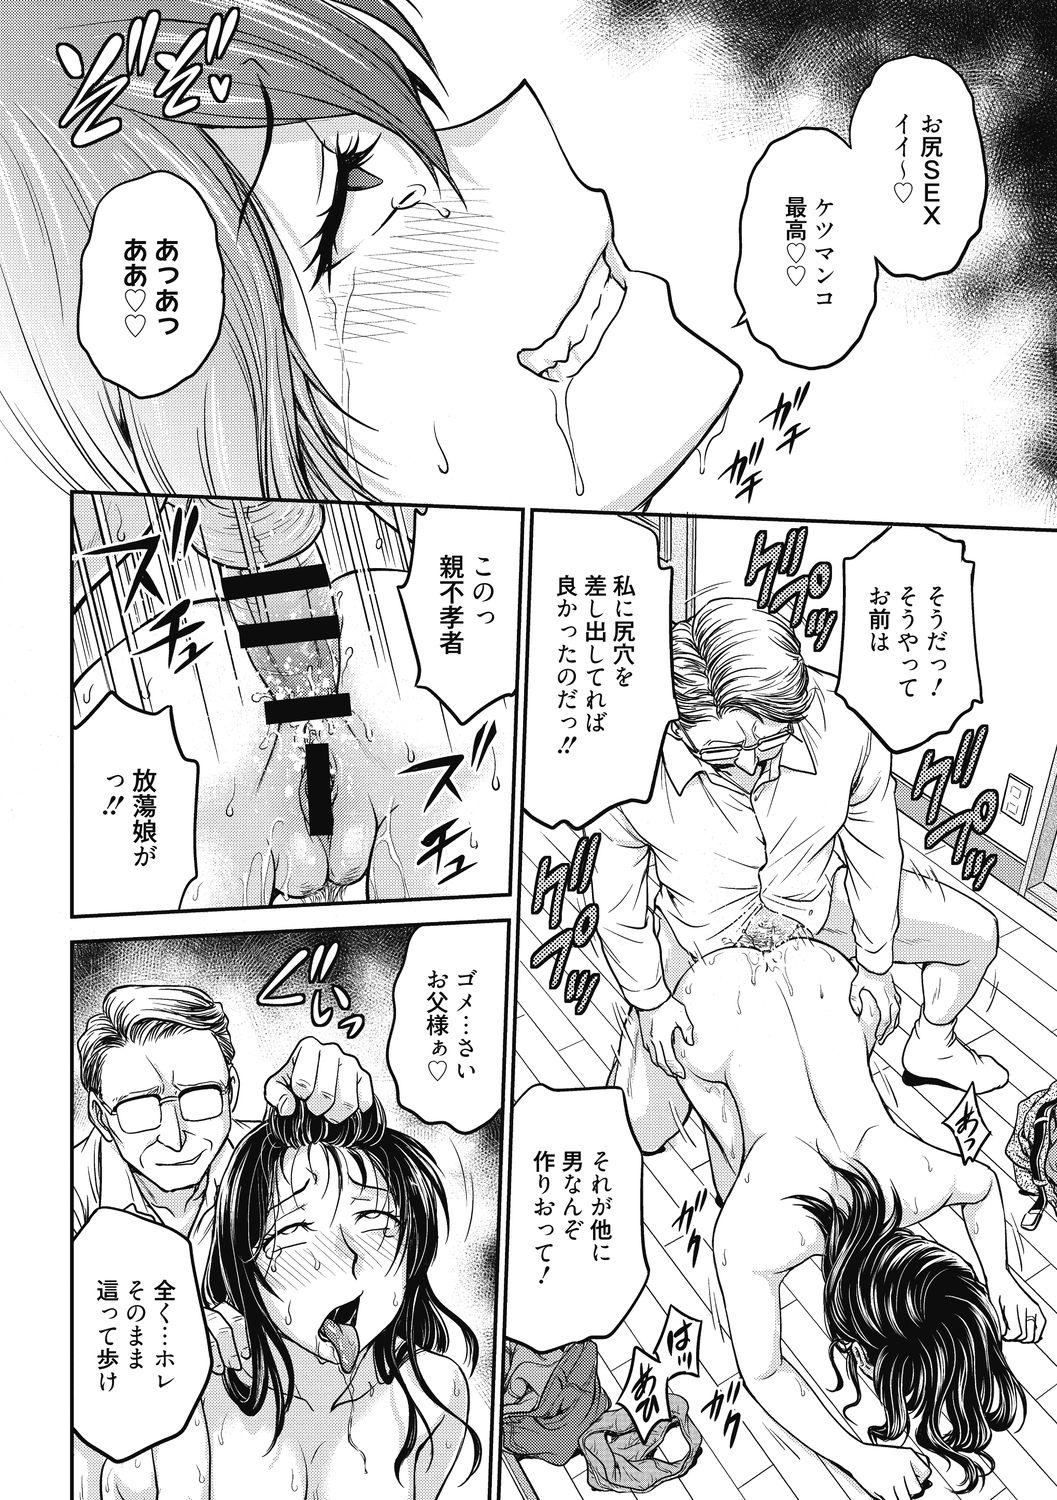 Kanojo no Shitagi o Nusundara... - I tried to steal her underwear... 51